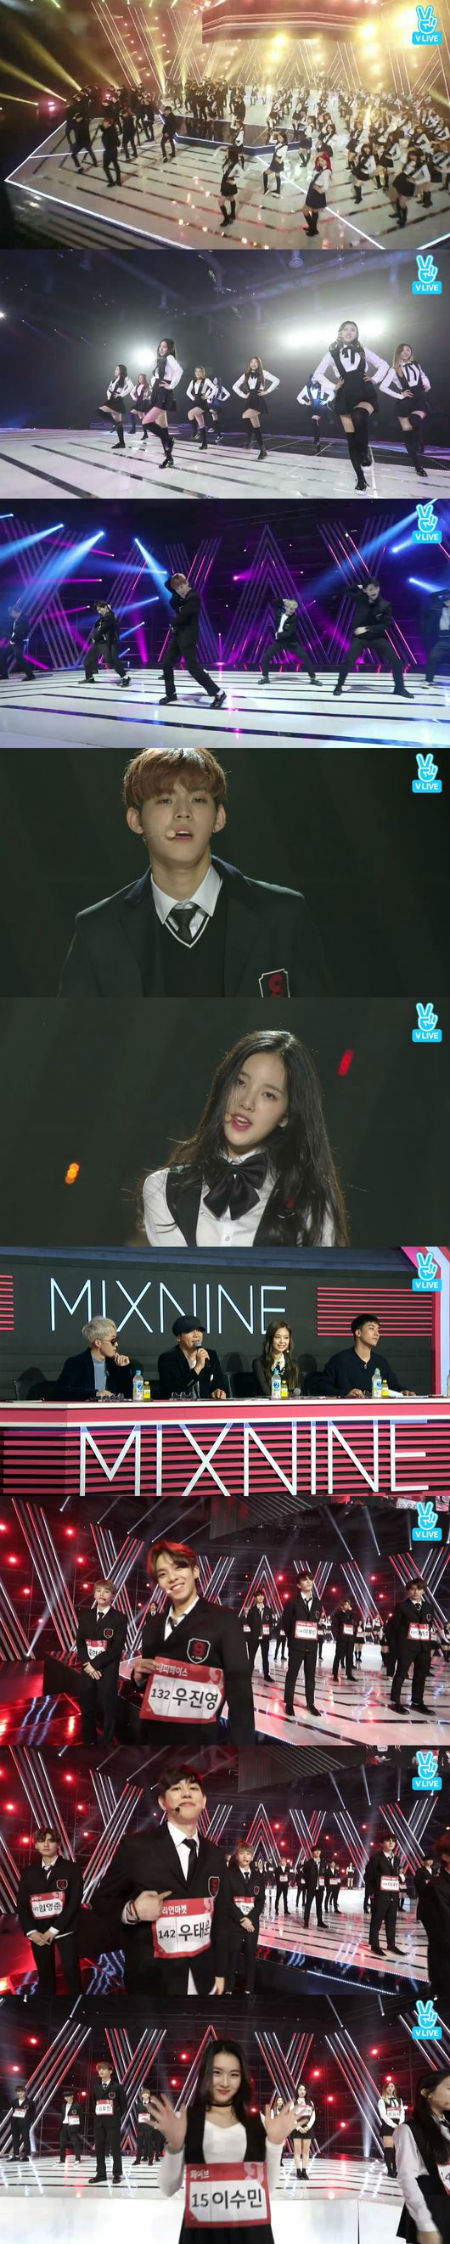 「MIX NINE」初回放送を前にショーケース、YGヤン代表も参加者を称賛